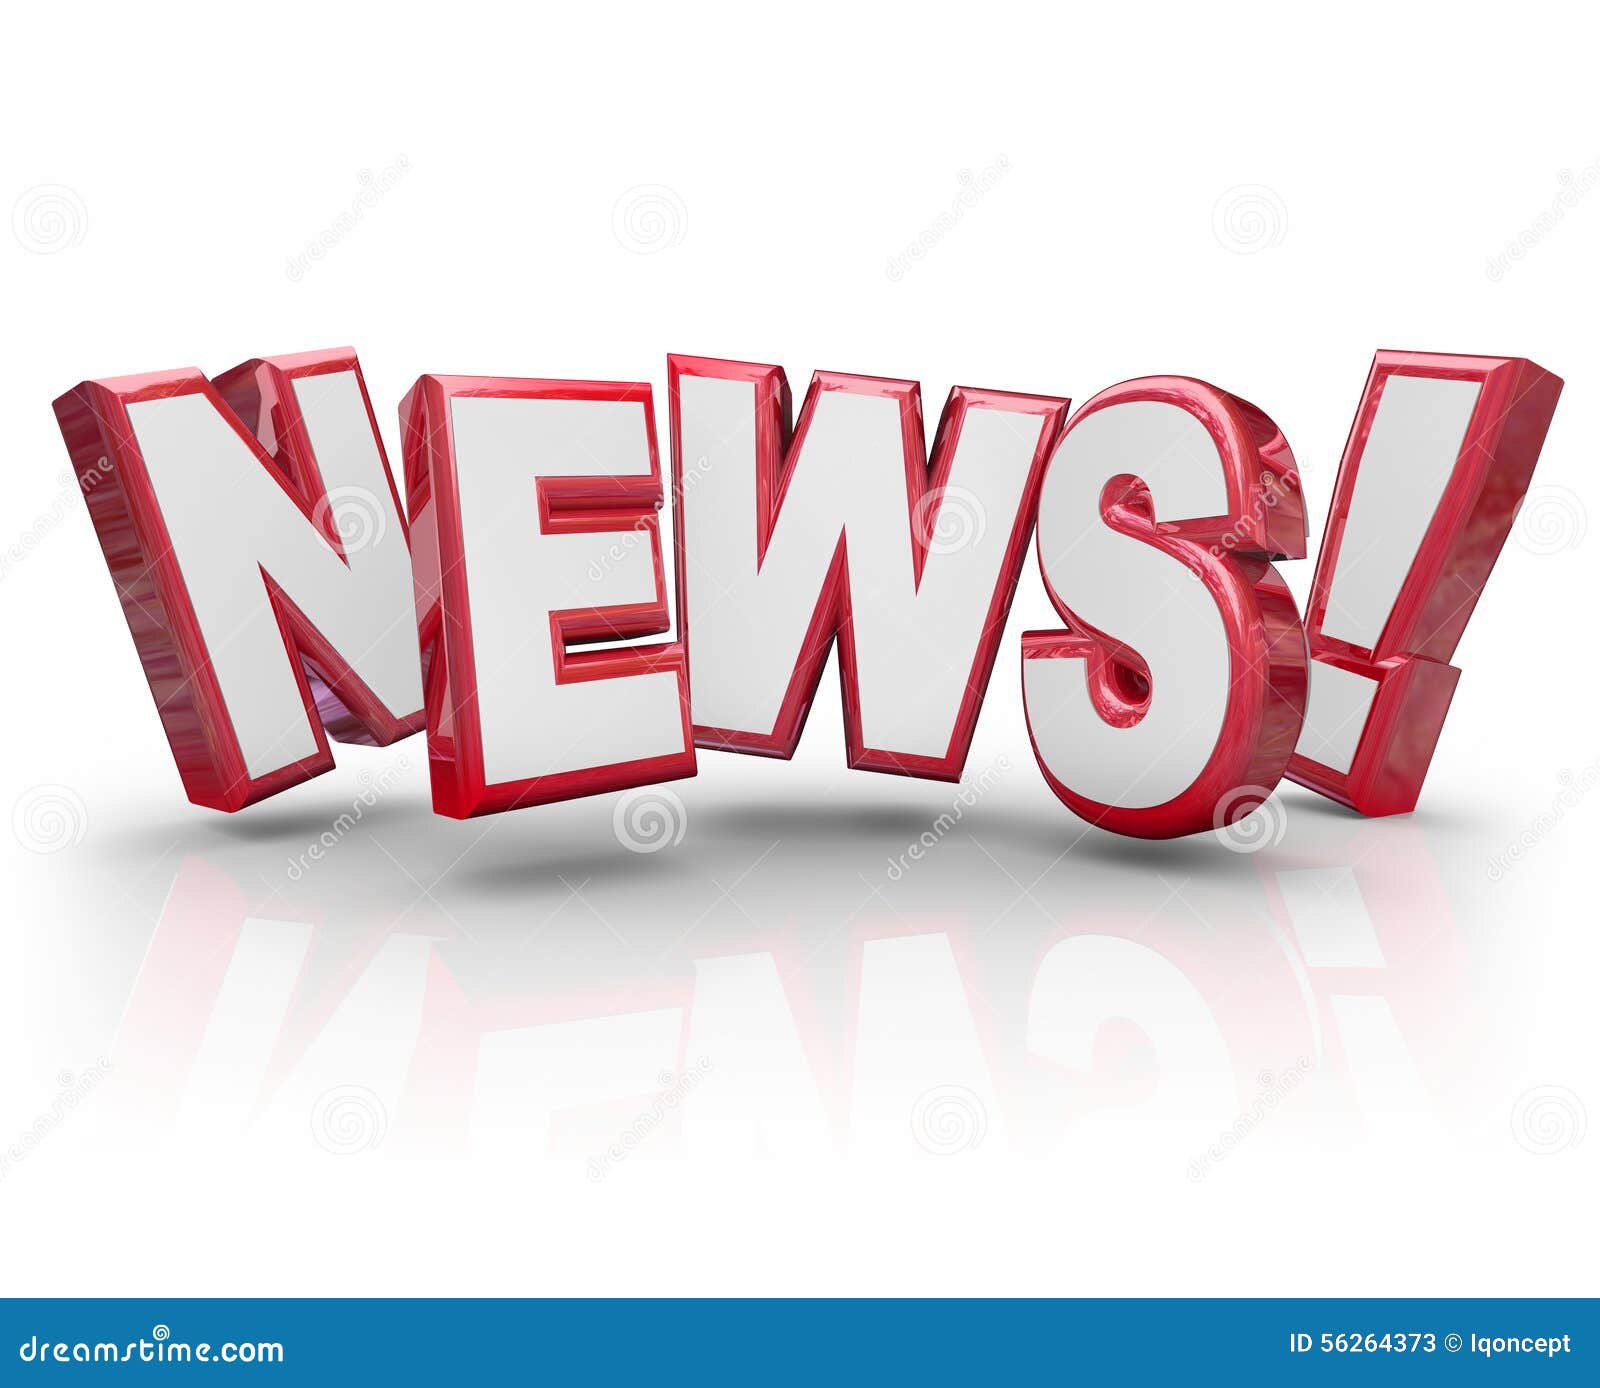 news update alert share information gossip buzz rumor